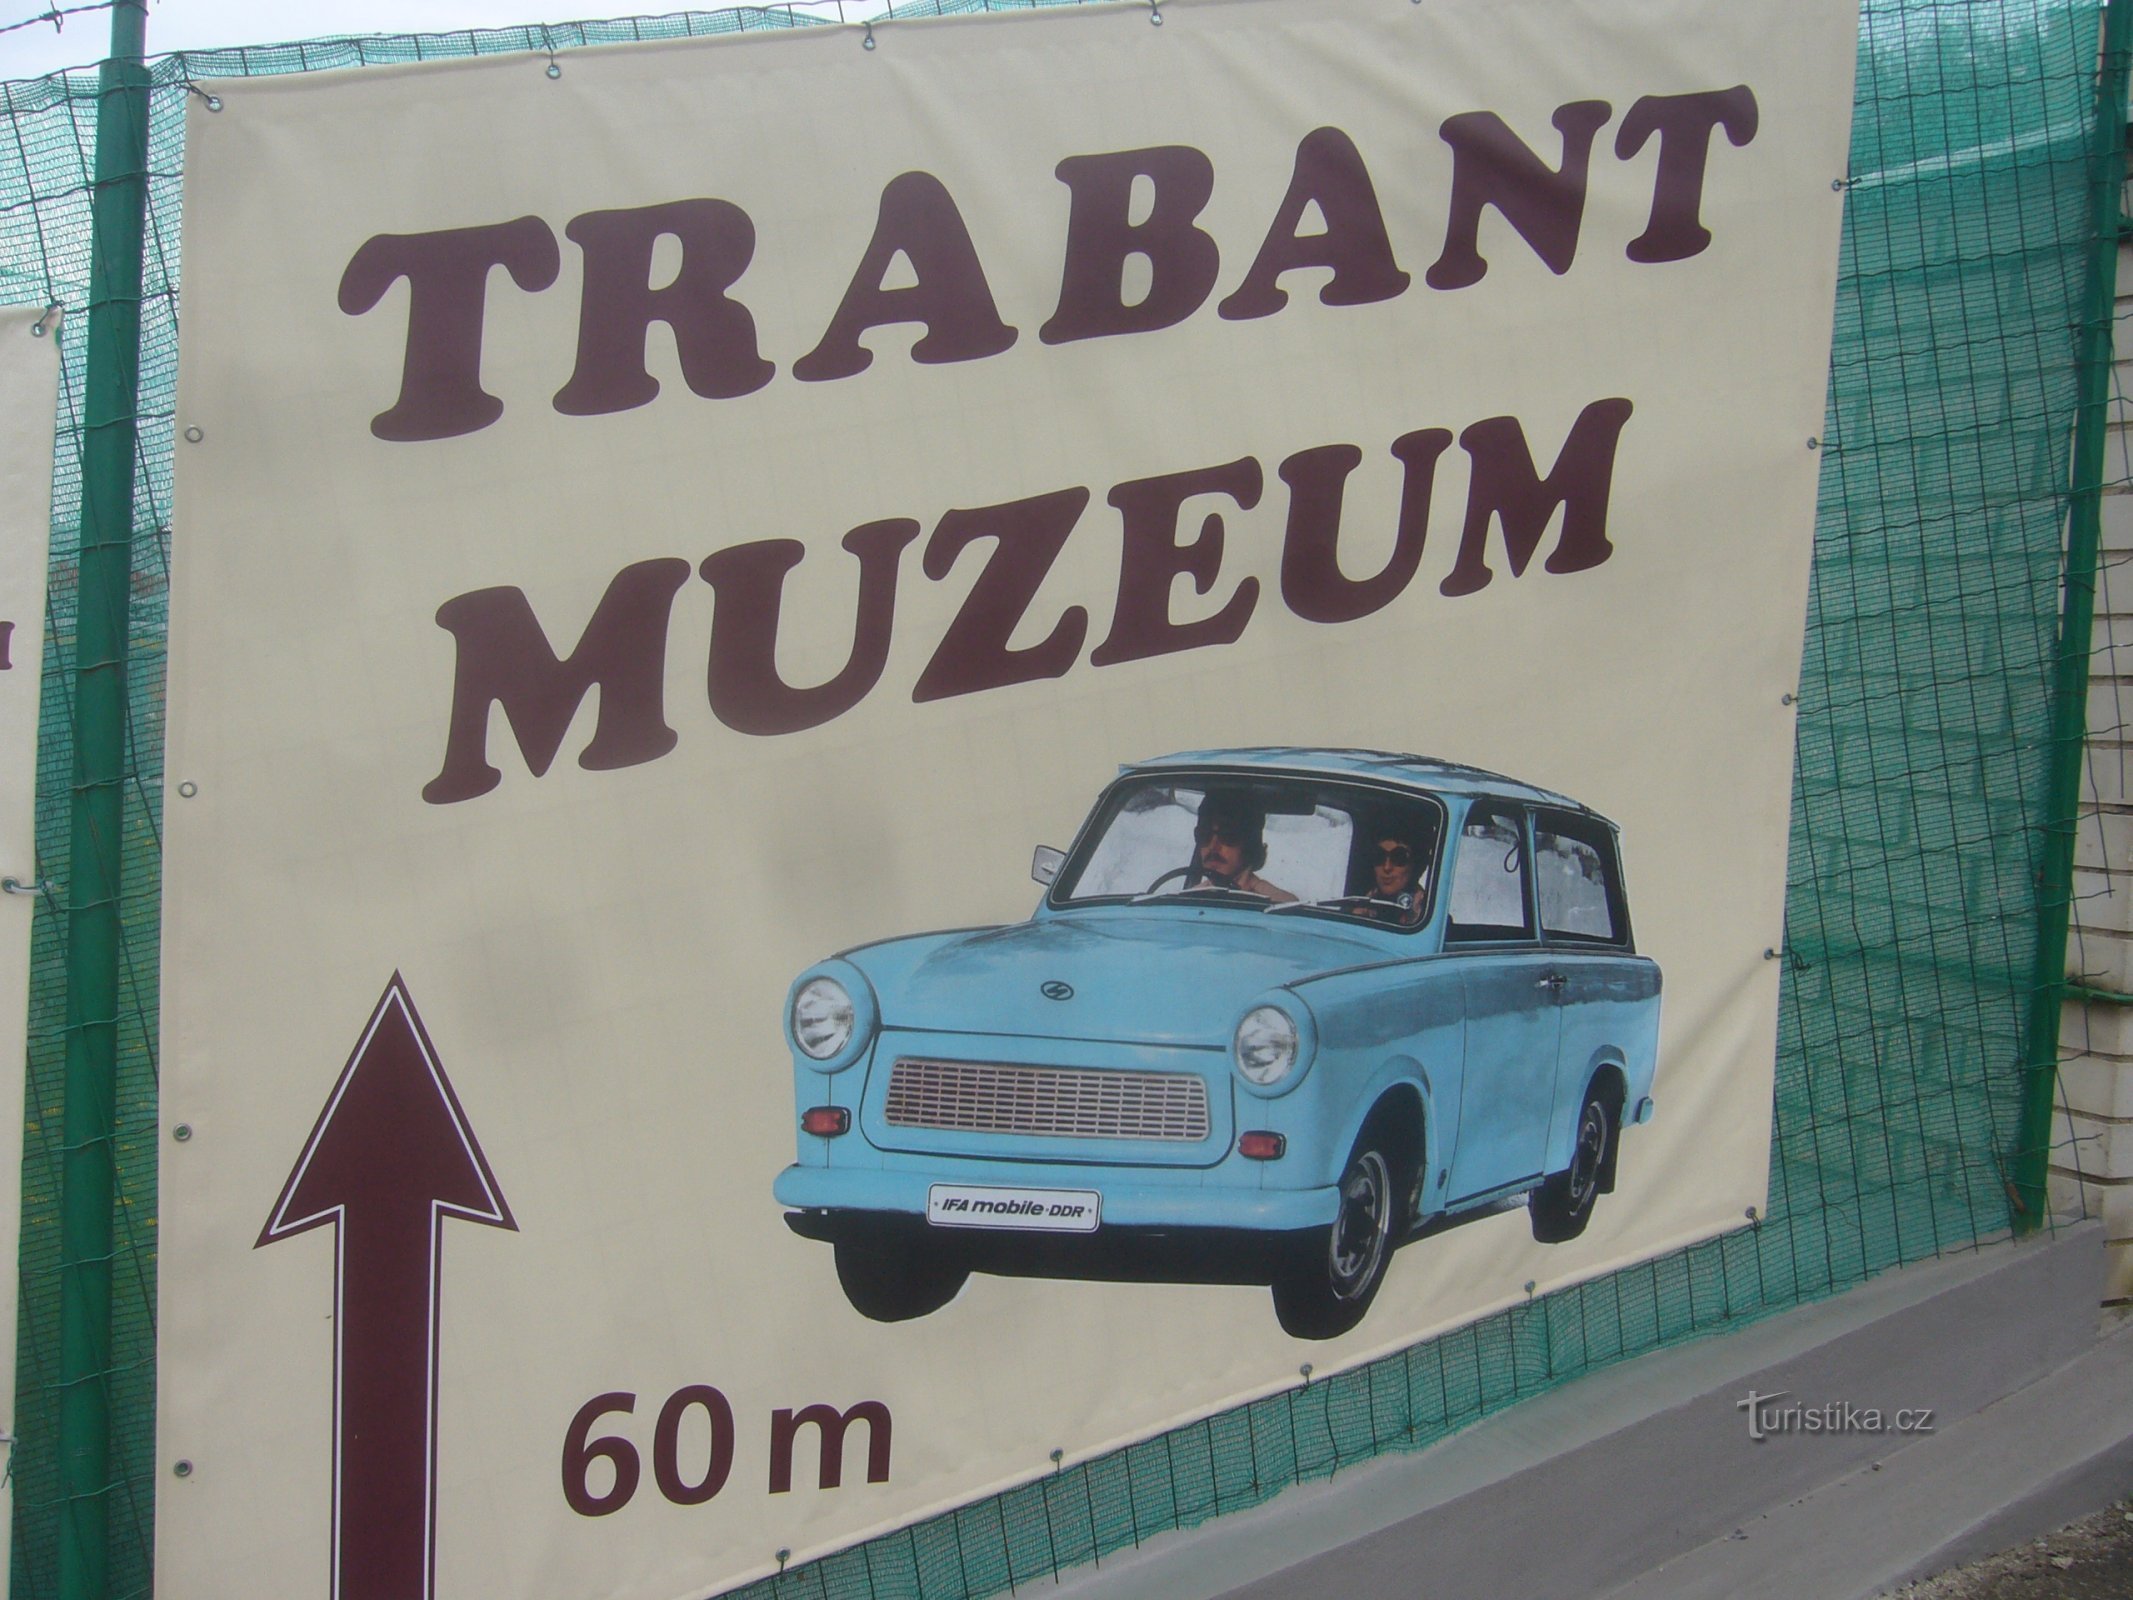 Muzeum Trabantu Motol